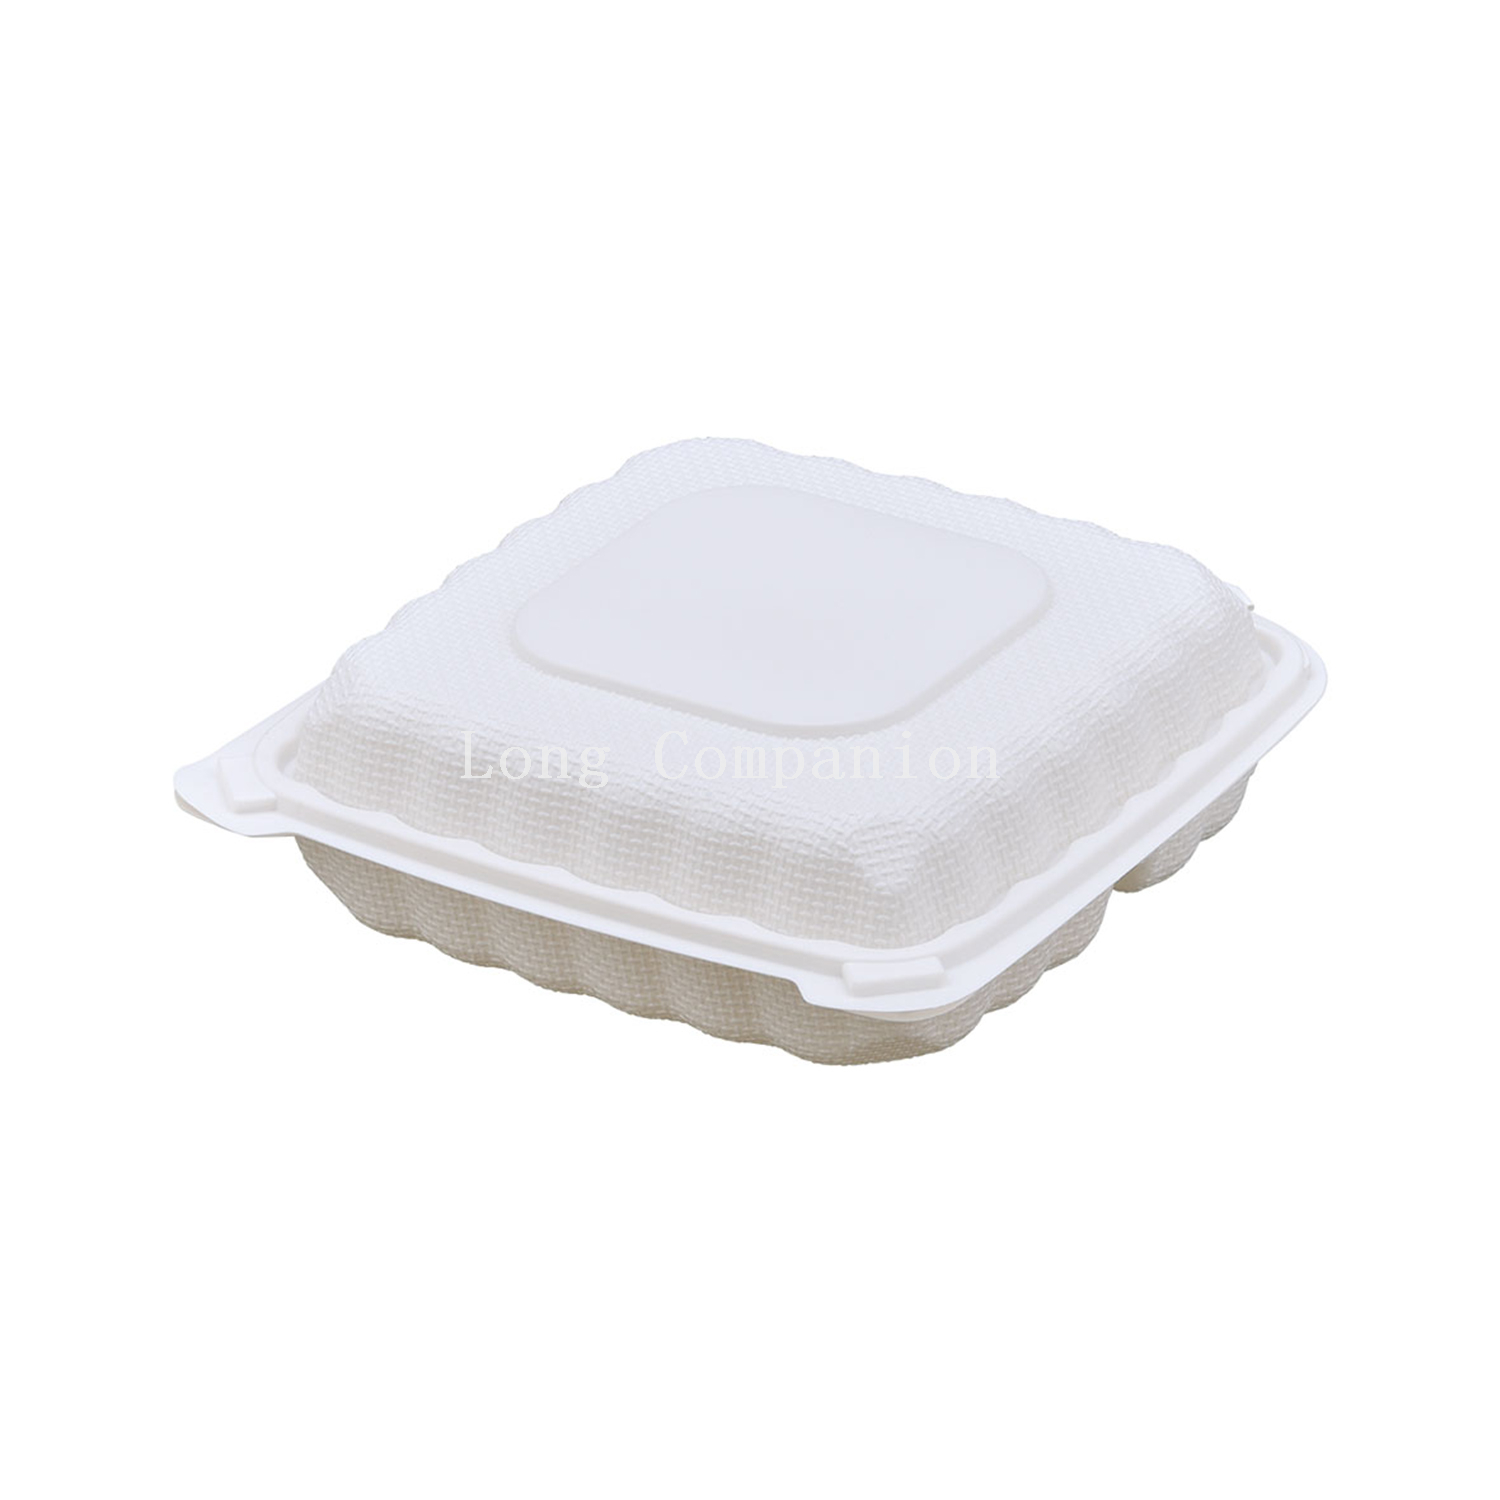 Disposable Lunch Box (50pc) (Black) 10-5/8 CK-8306